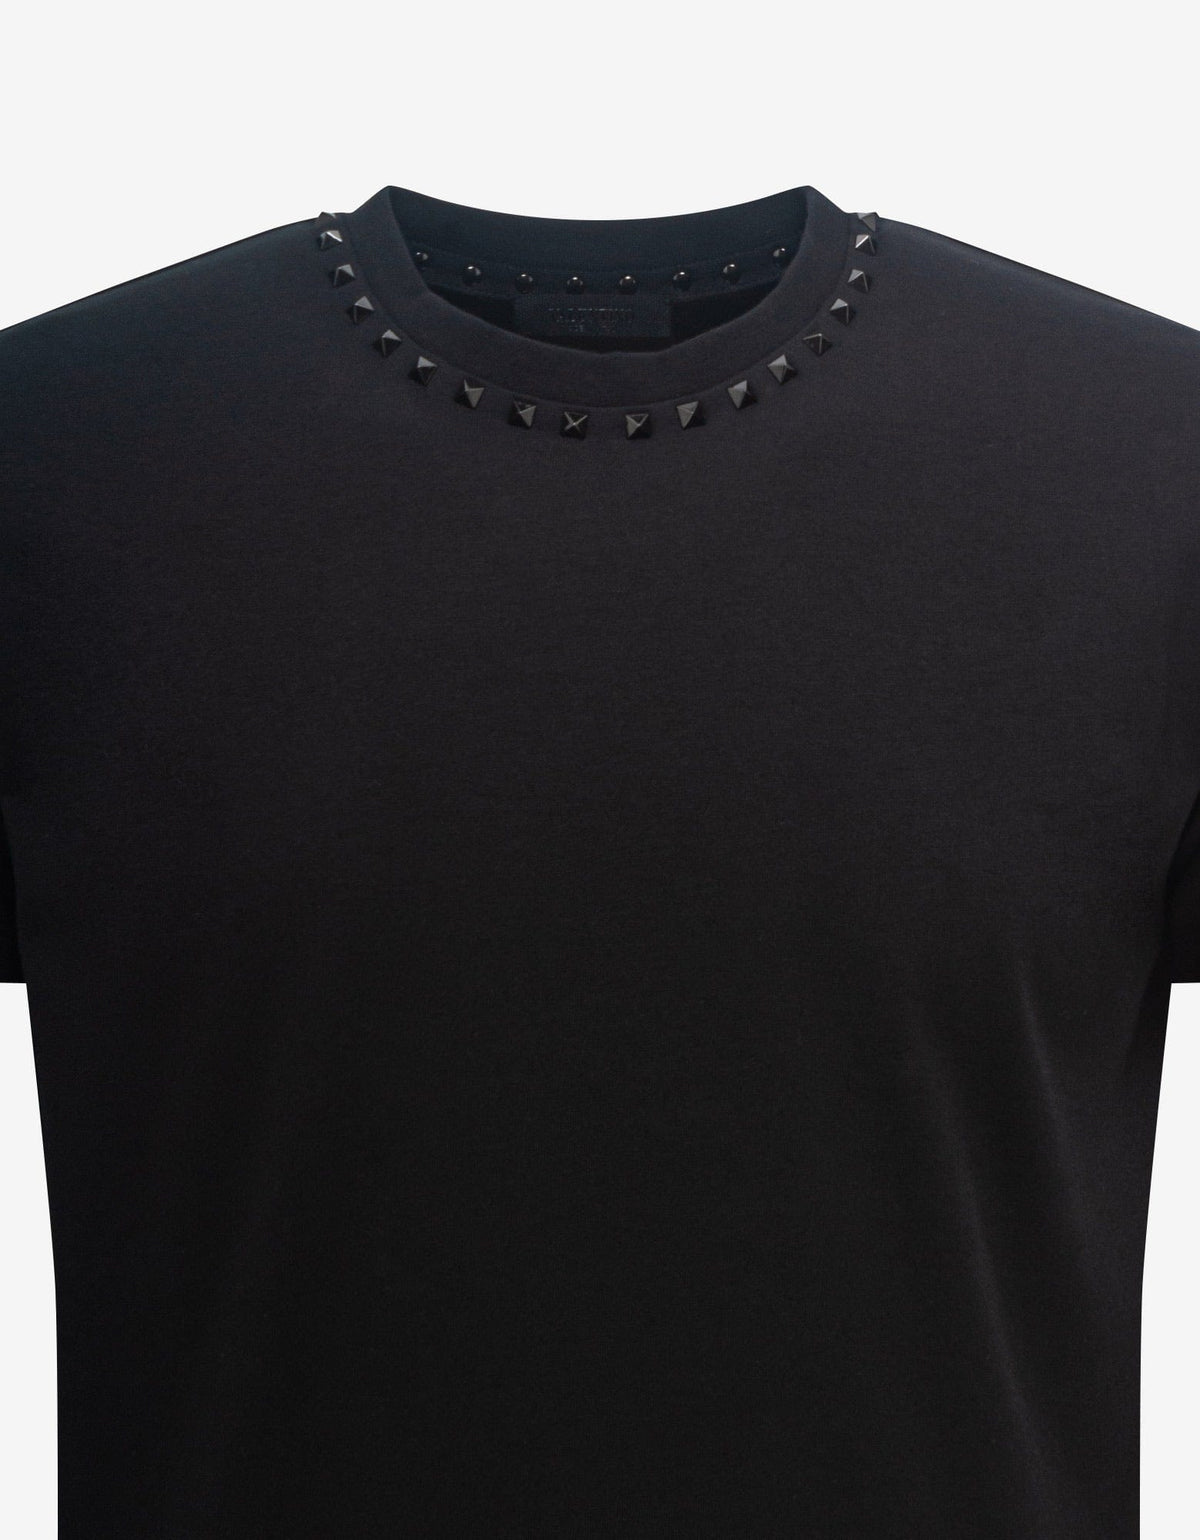 Valentino Black Untitled Stud T-Shirt